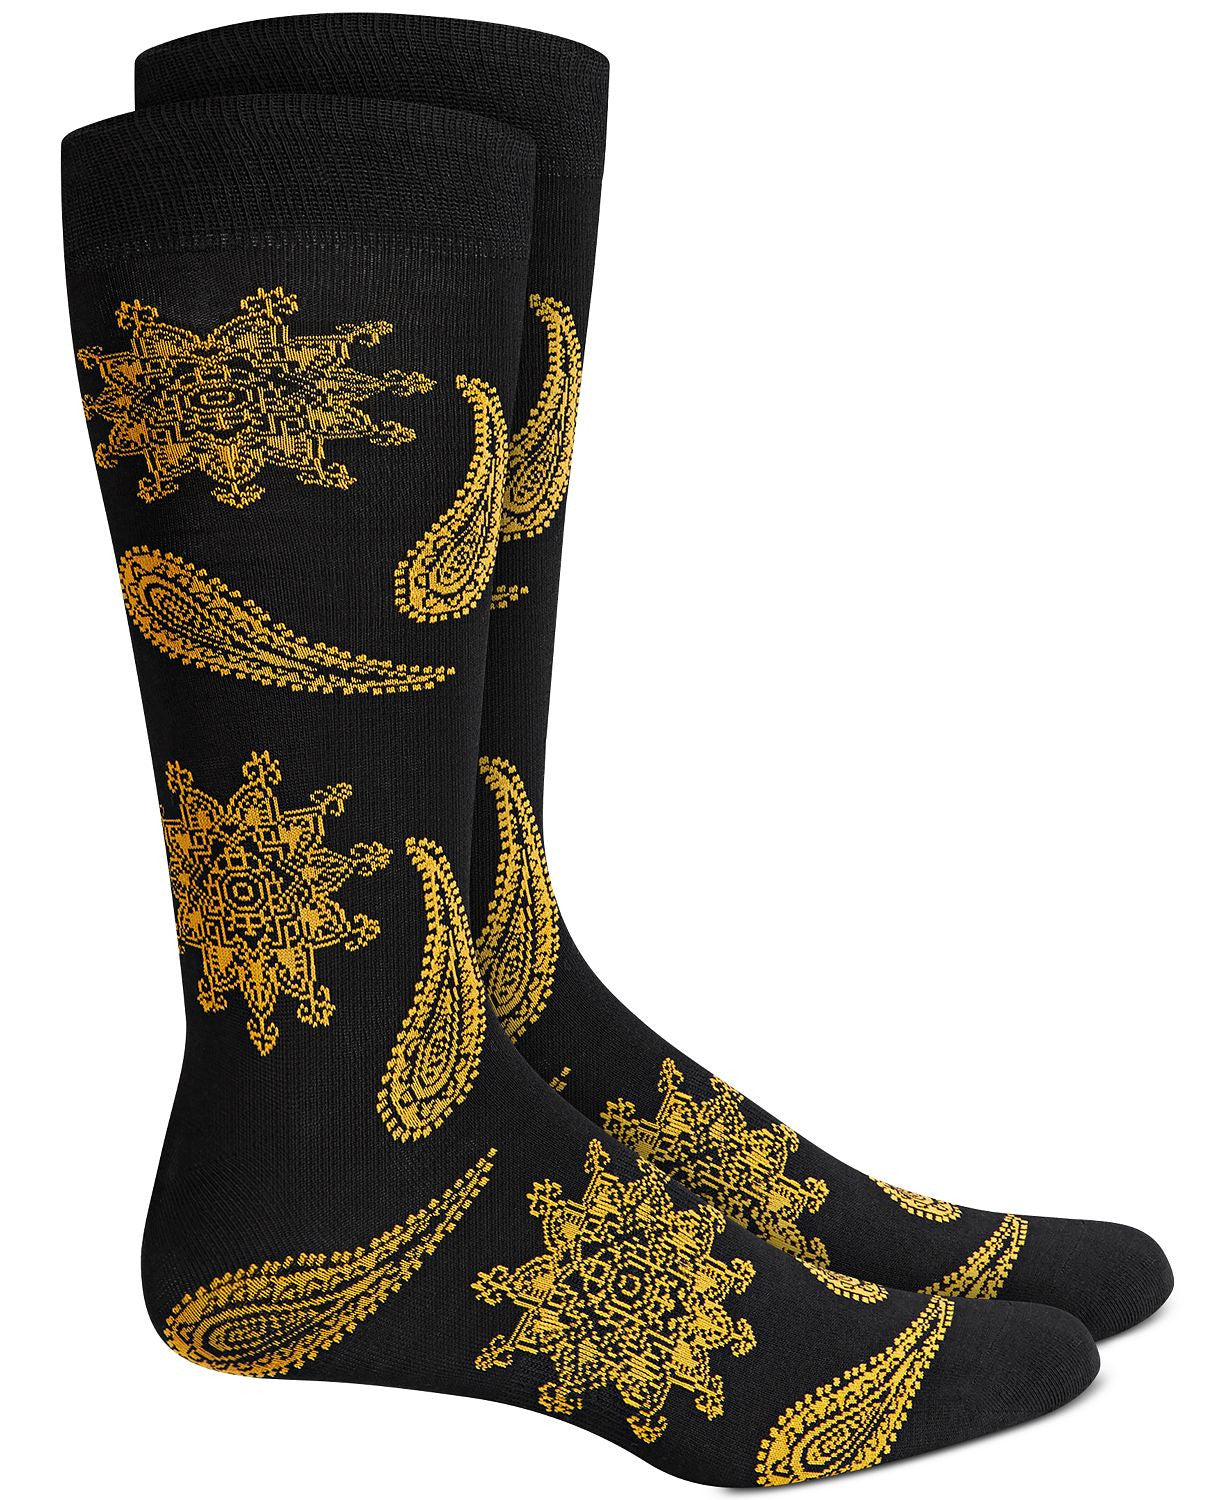 BAR III Floral Paisley Socks Black Yellow